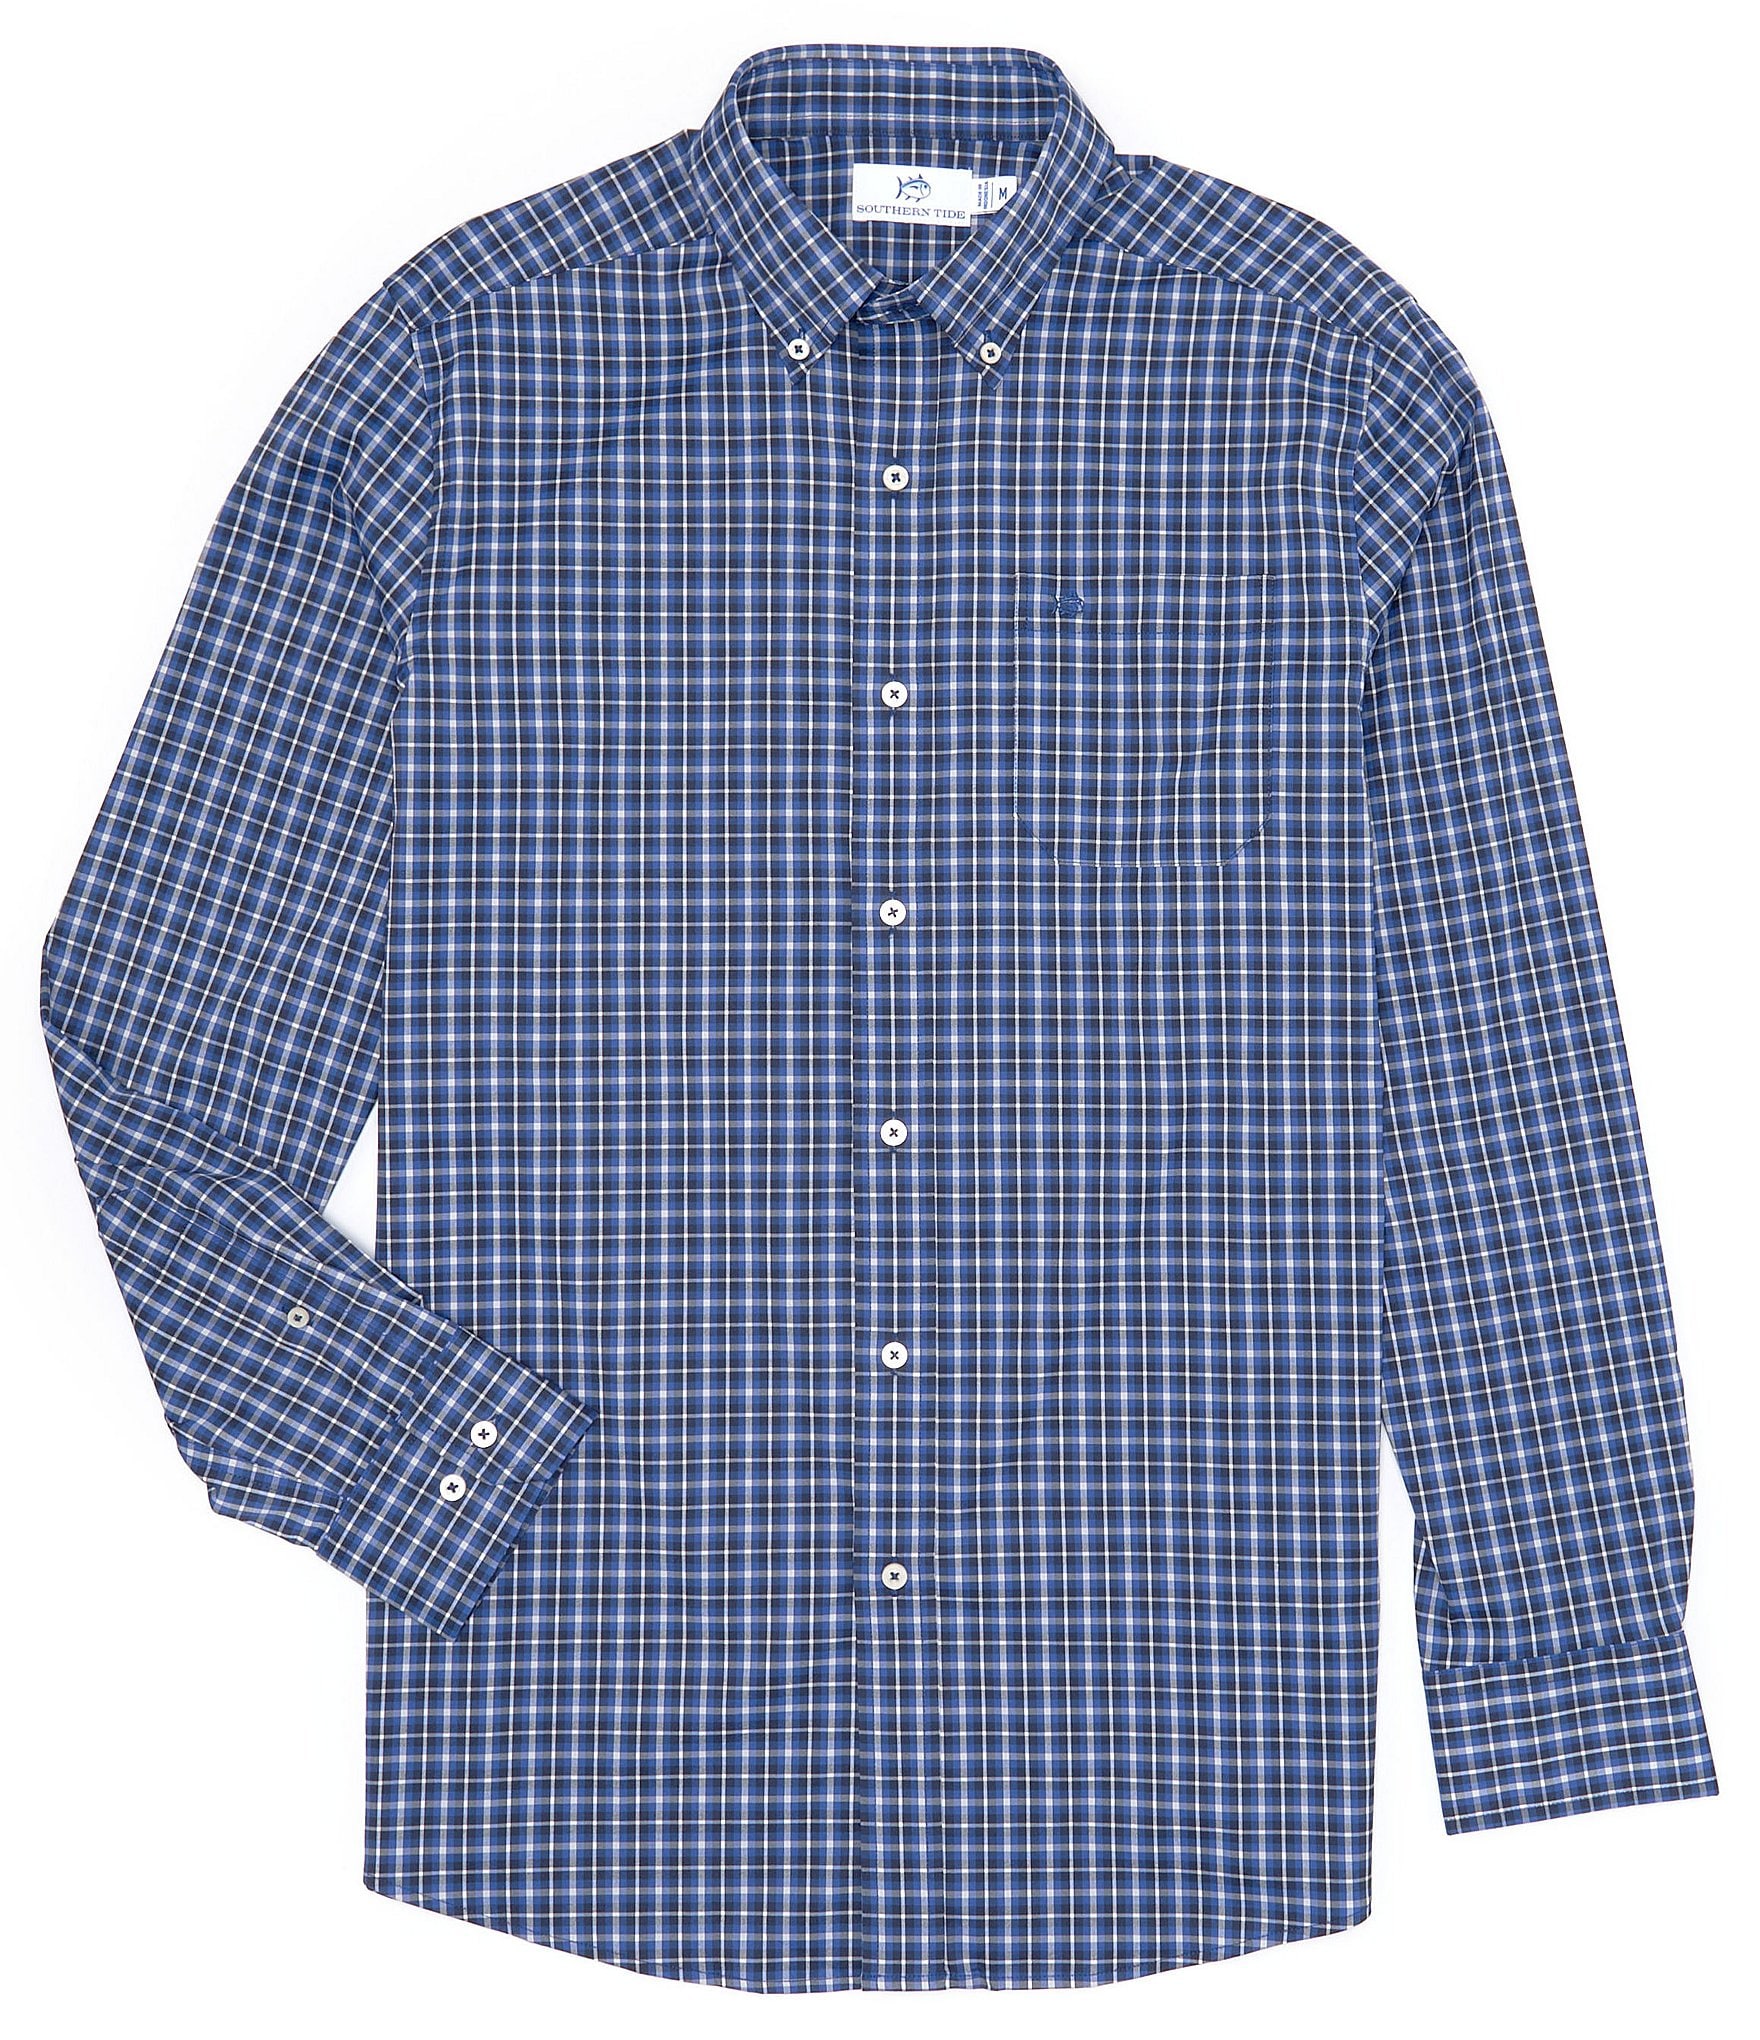 Sale & Clearance Long Sleeve Men's Casual Button-Up Shirts | Dillard's